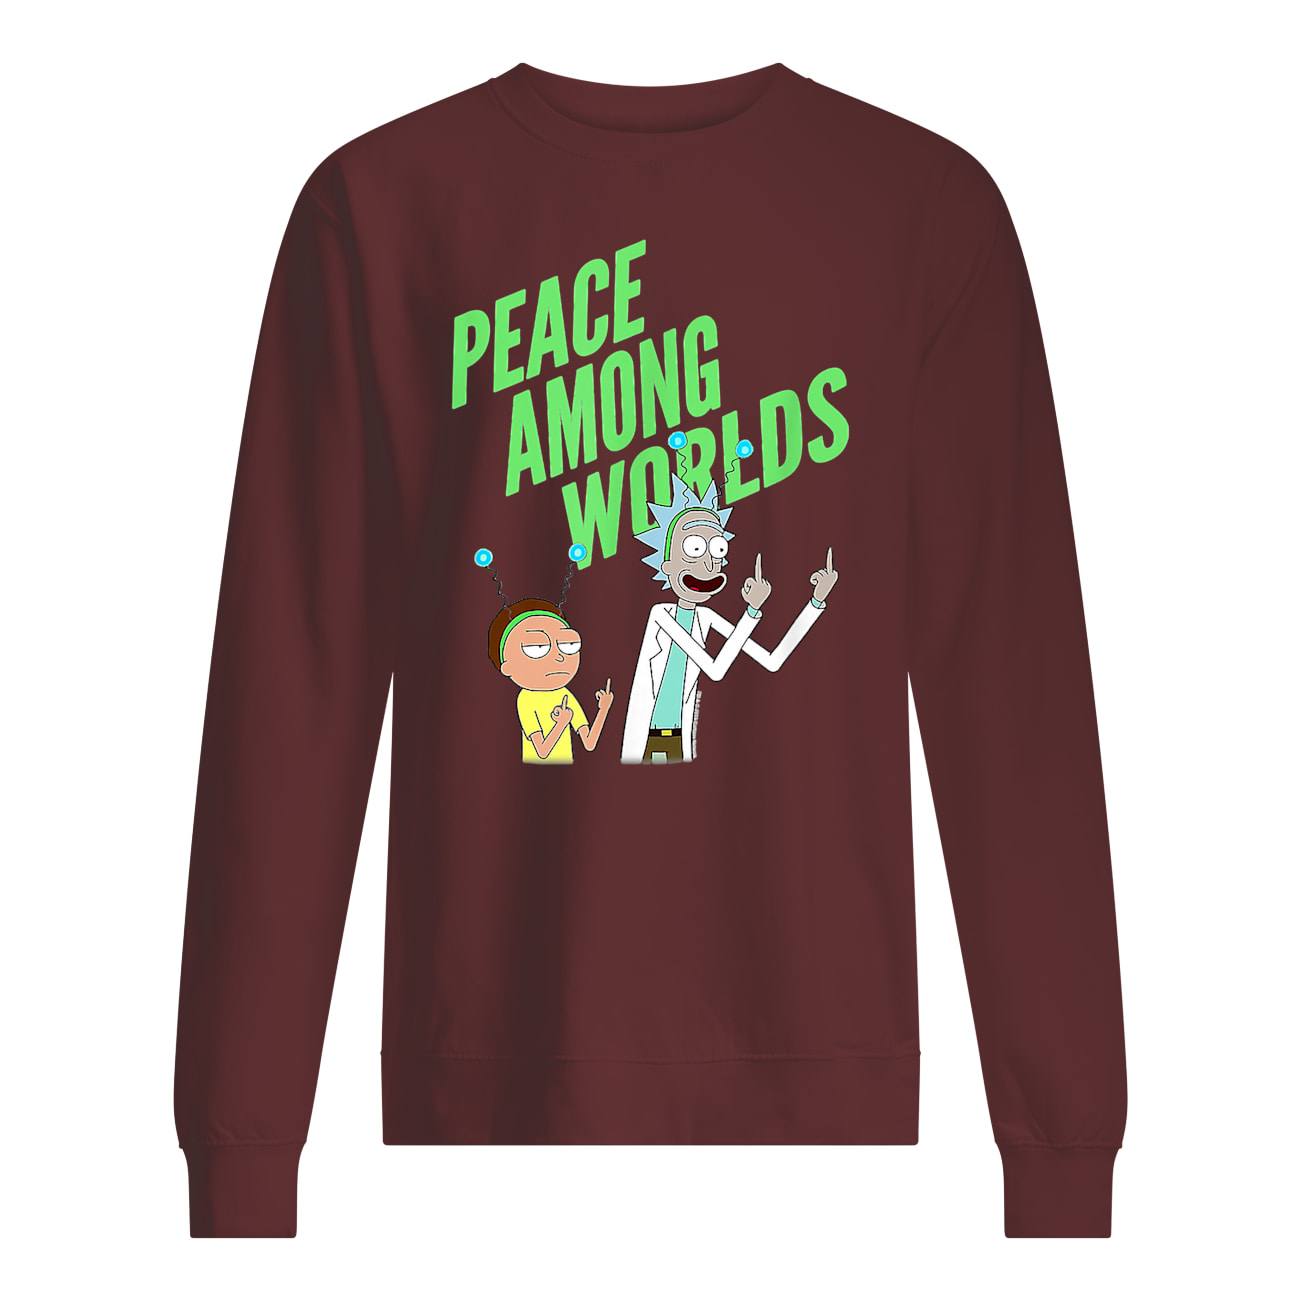 Rick and morty peace among worlds sweatshirt